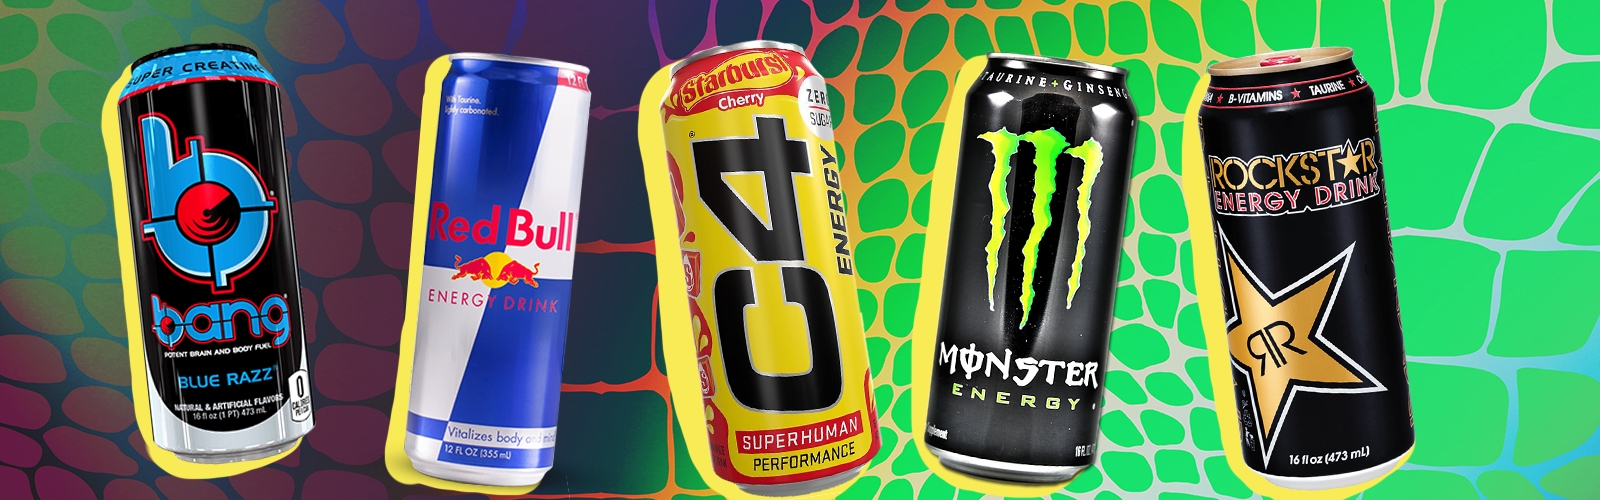 Do Rockstar Energy Drinks Actually Work? – Kill Cliff